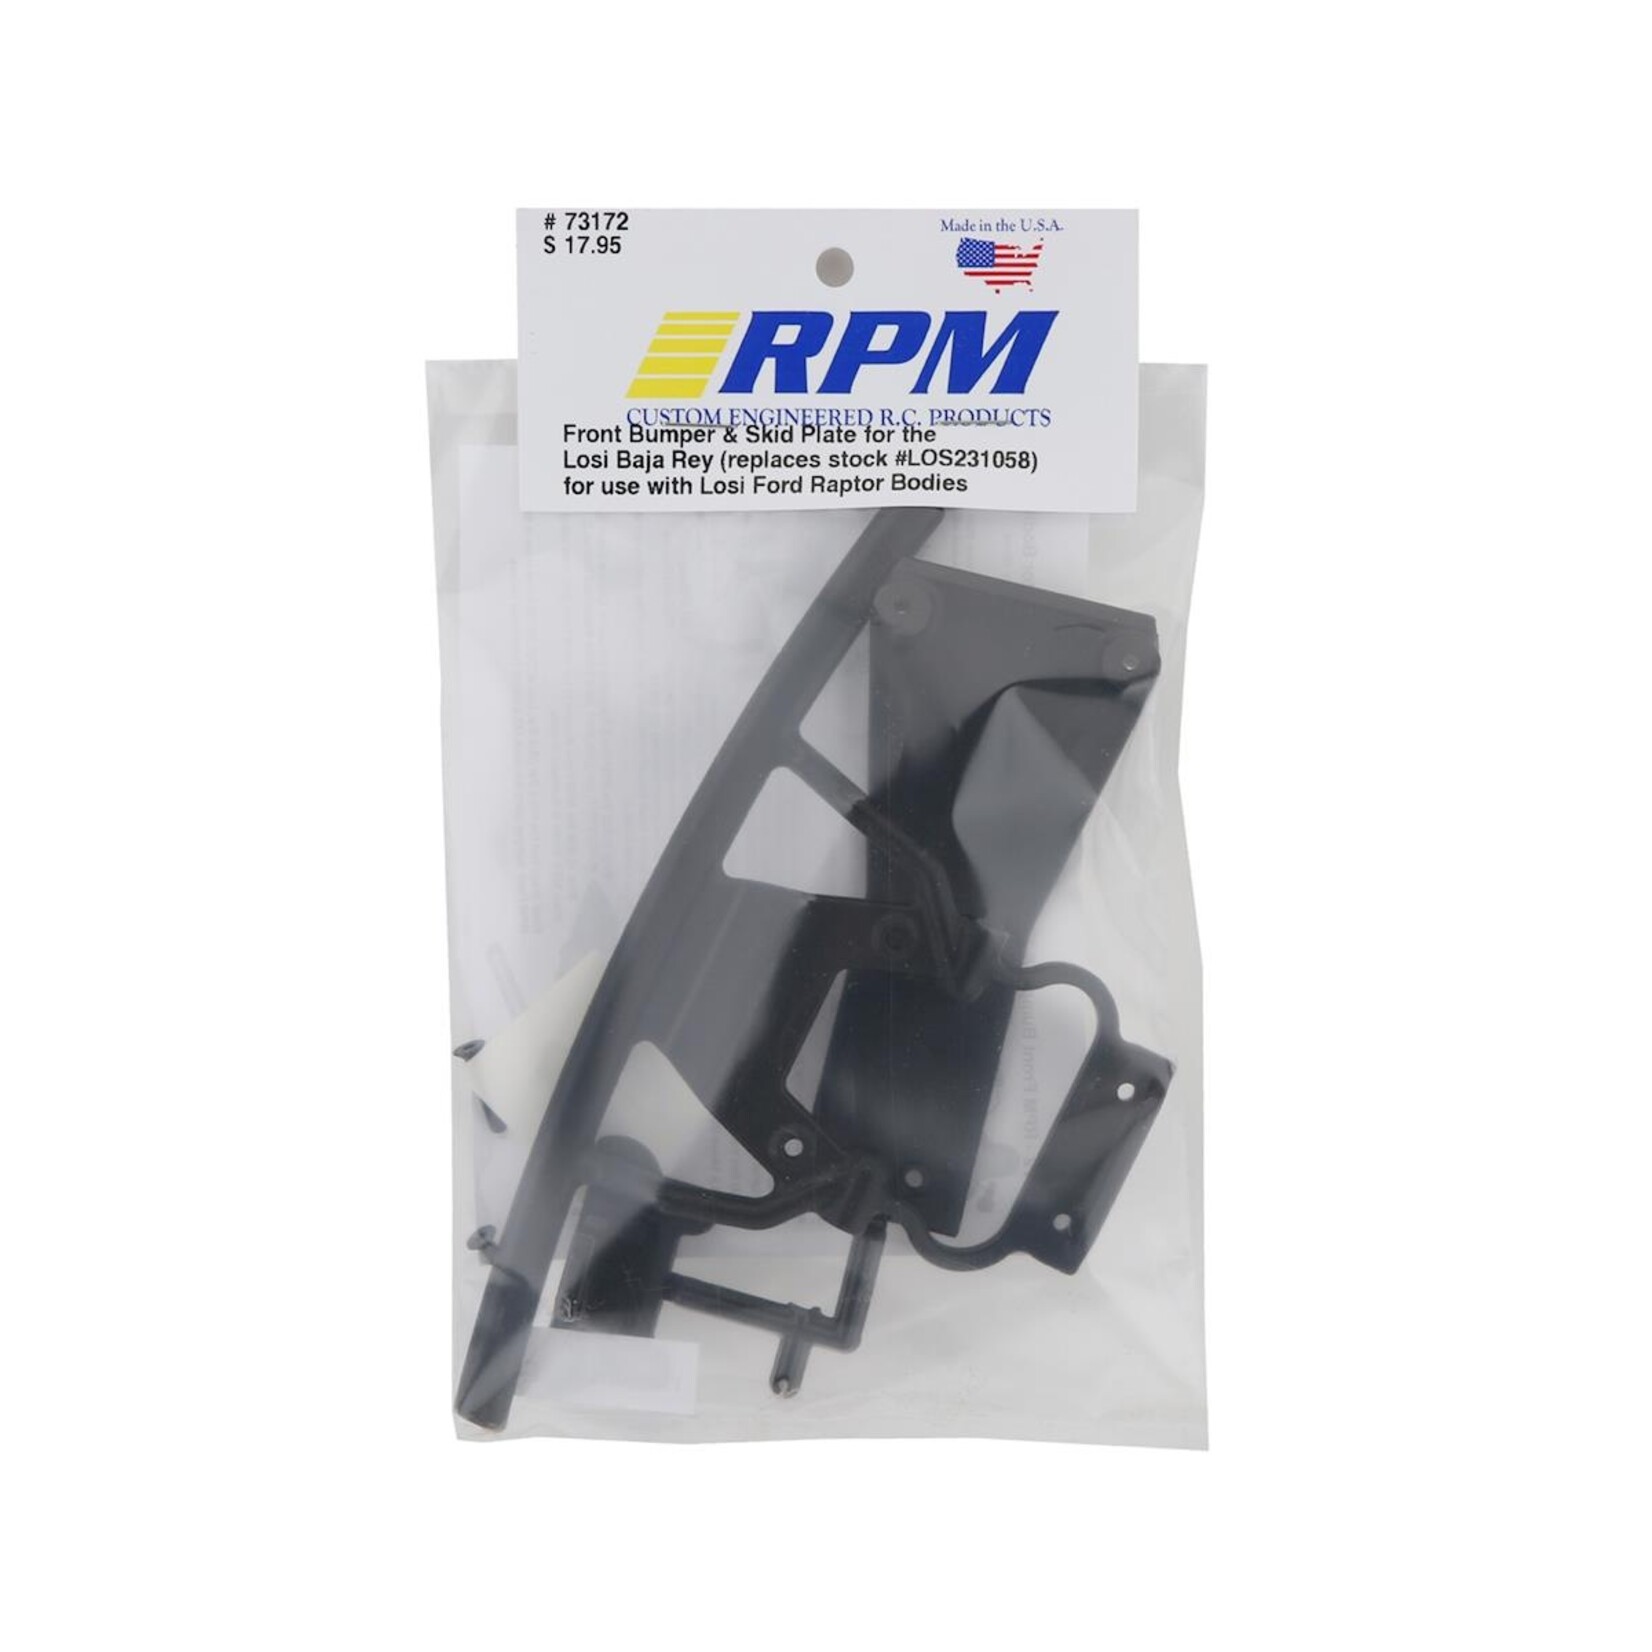 RPM RPM Losi Baja Rey Front Bumper & Skid Plate (Ford Raptor Bodies) #73172